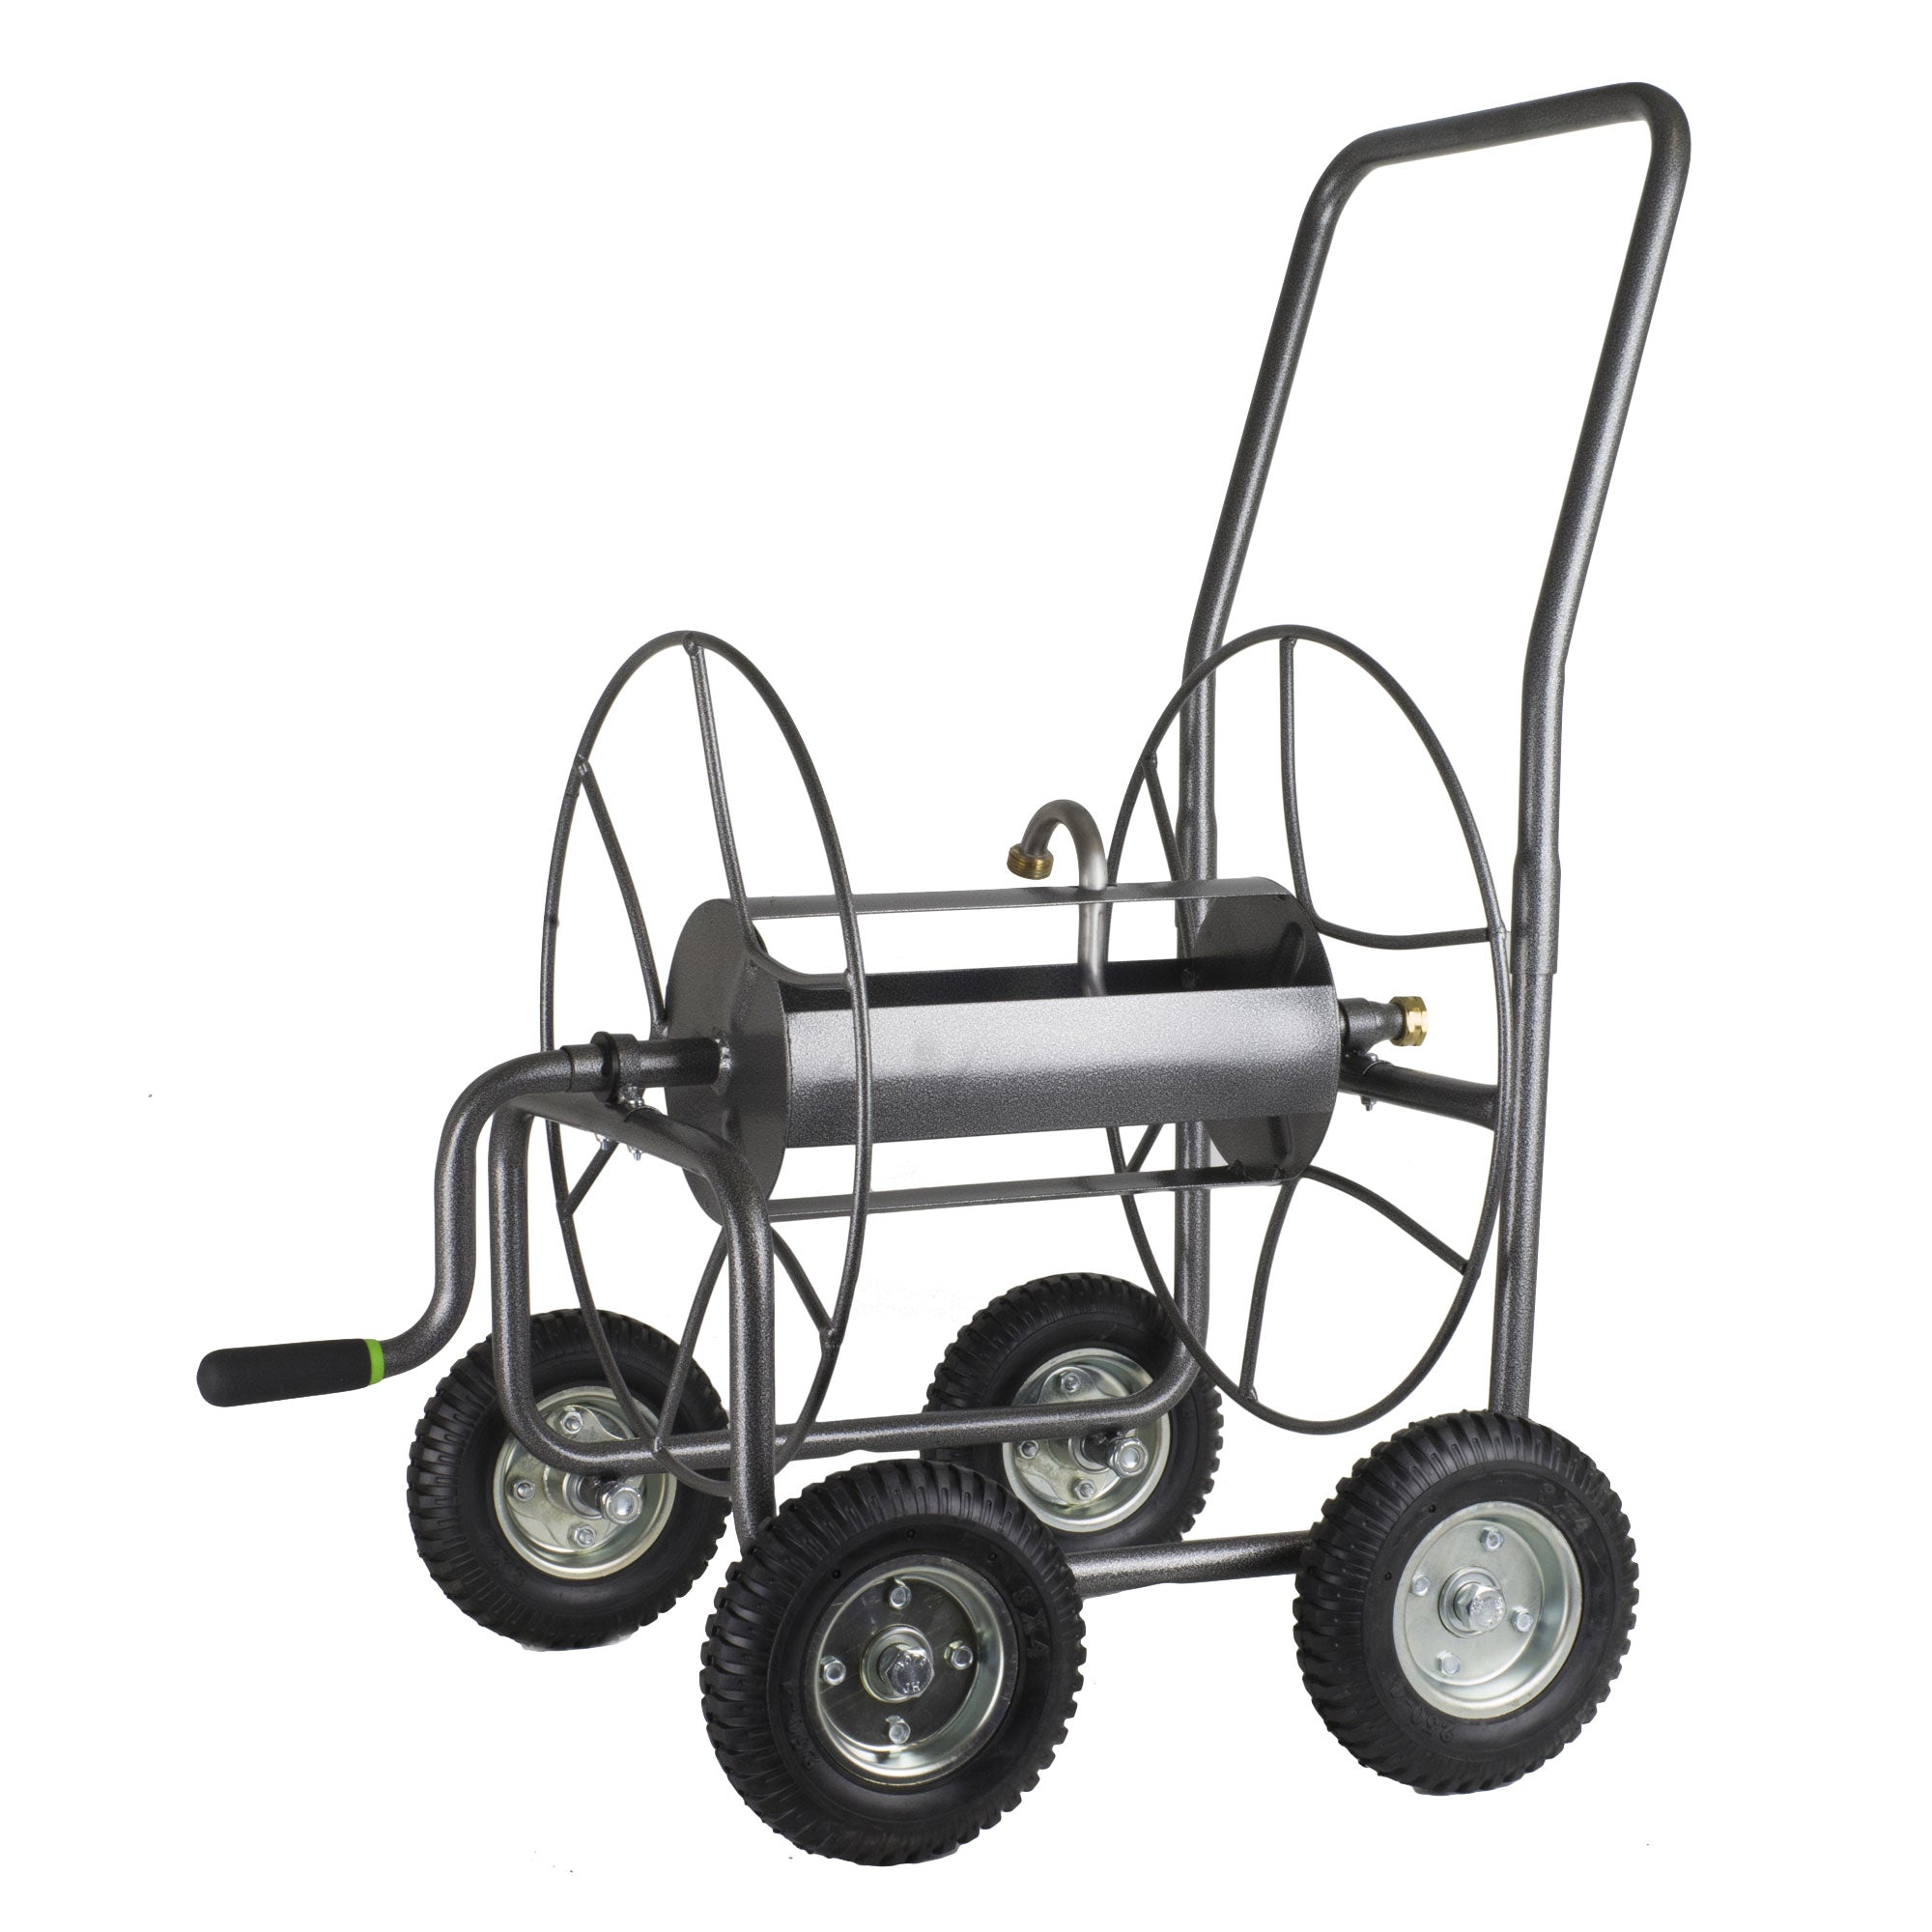 Utility 4 wheel garden hose reel cart for Gardens & Irrigation 